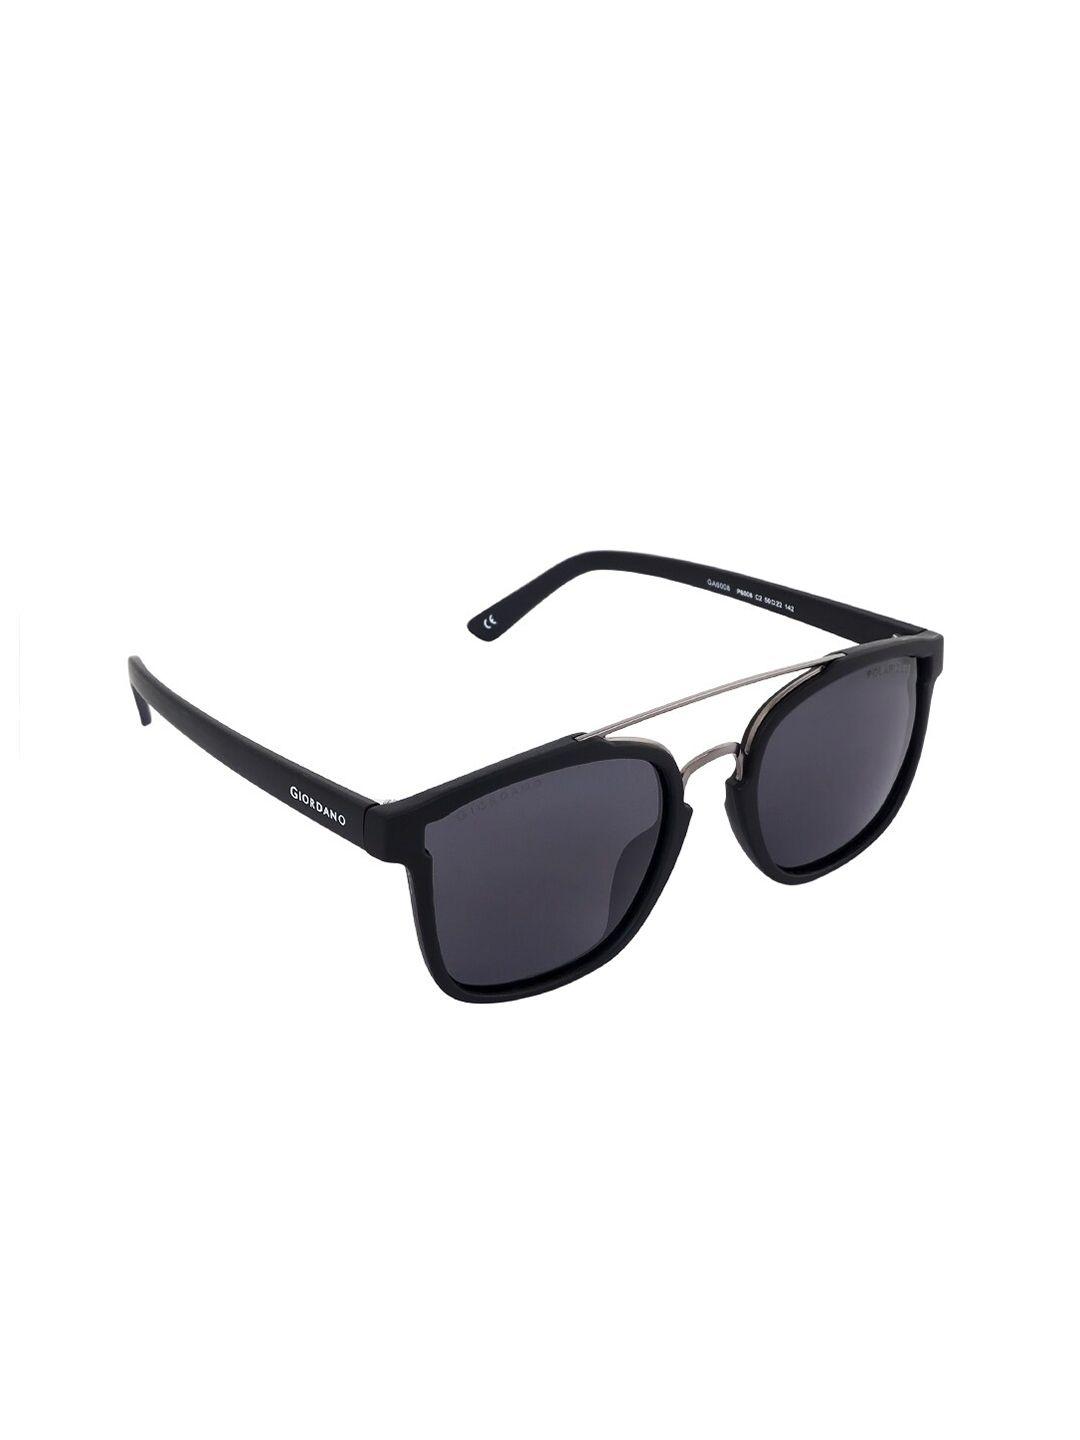 giordano unisex grey lens & black wayfarer sunglasses ga6008c02